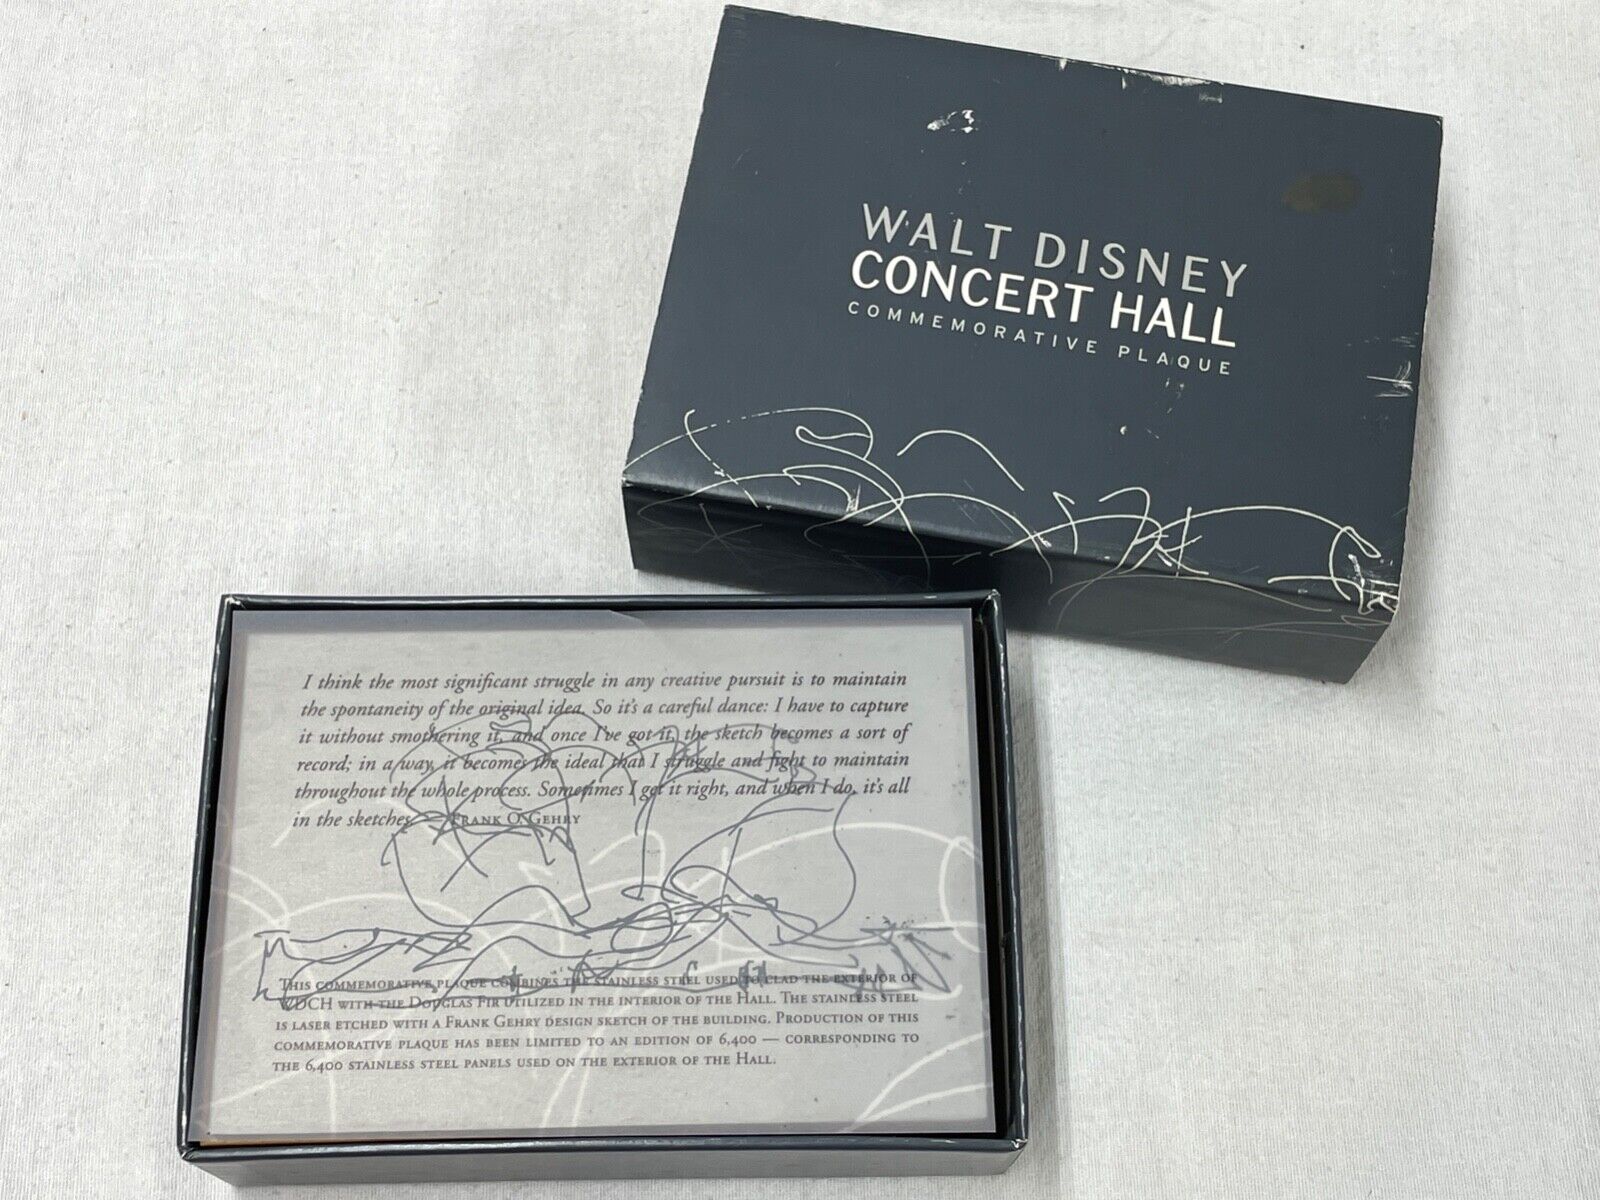 Disney Concert Hall Commemorative Plaque Frank Gehry Architecture Ltd. Edition